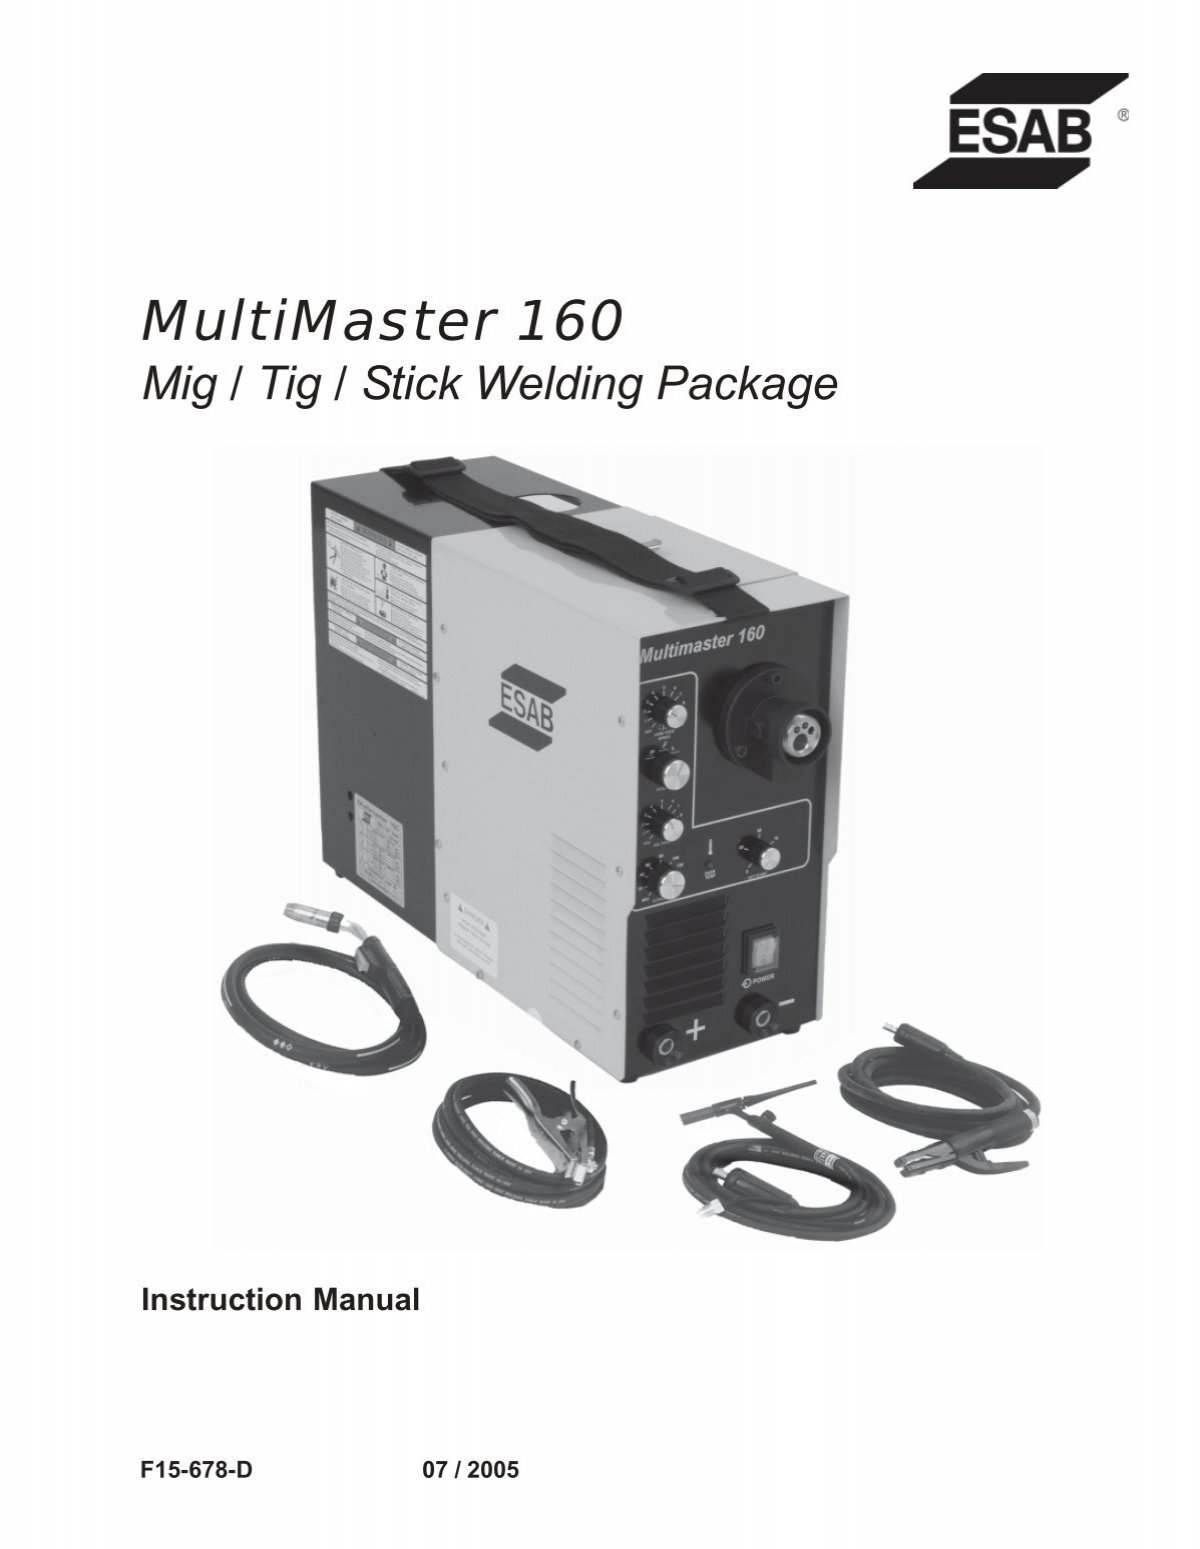 MultiMaster 160 Mig / Tig / Stick Welding Package